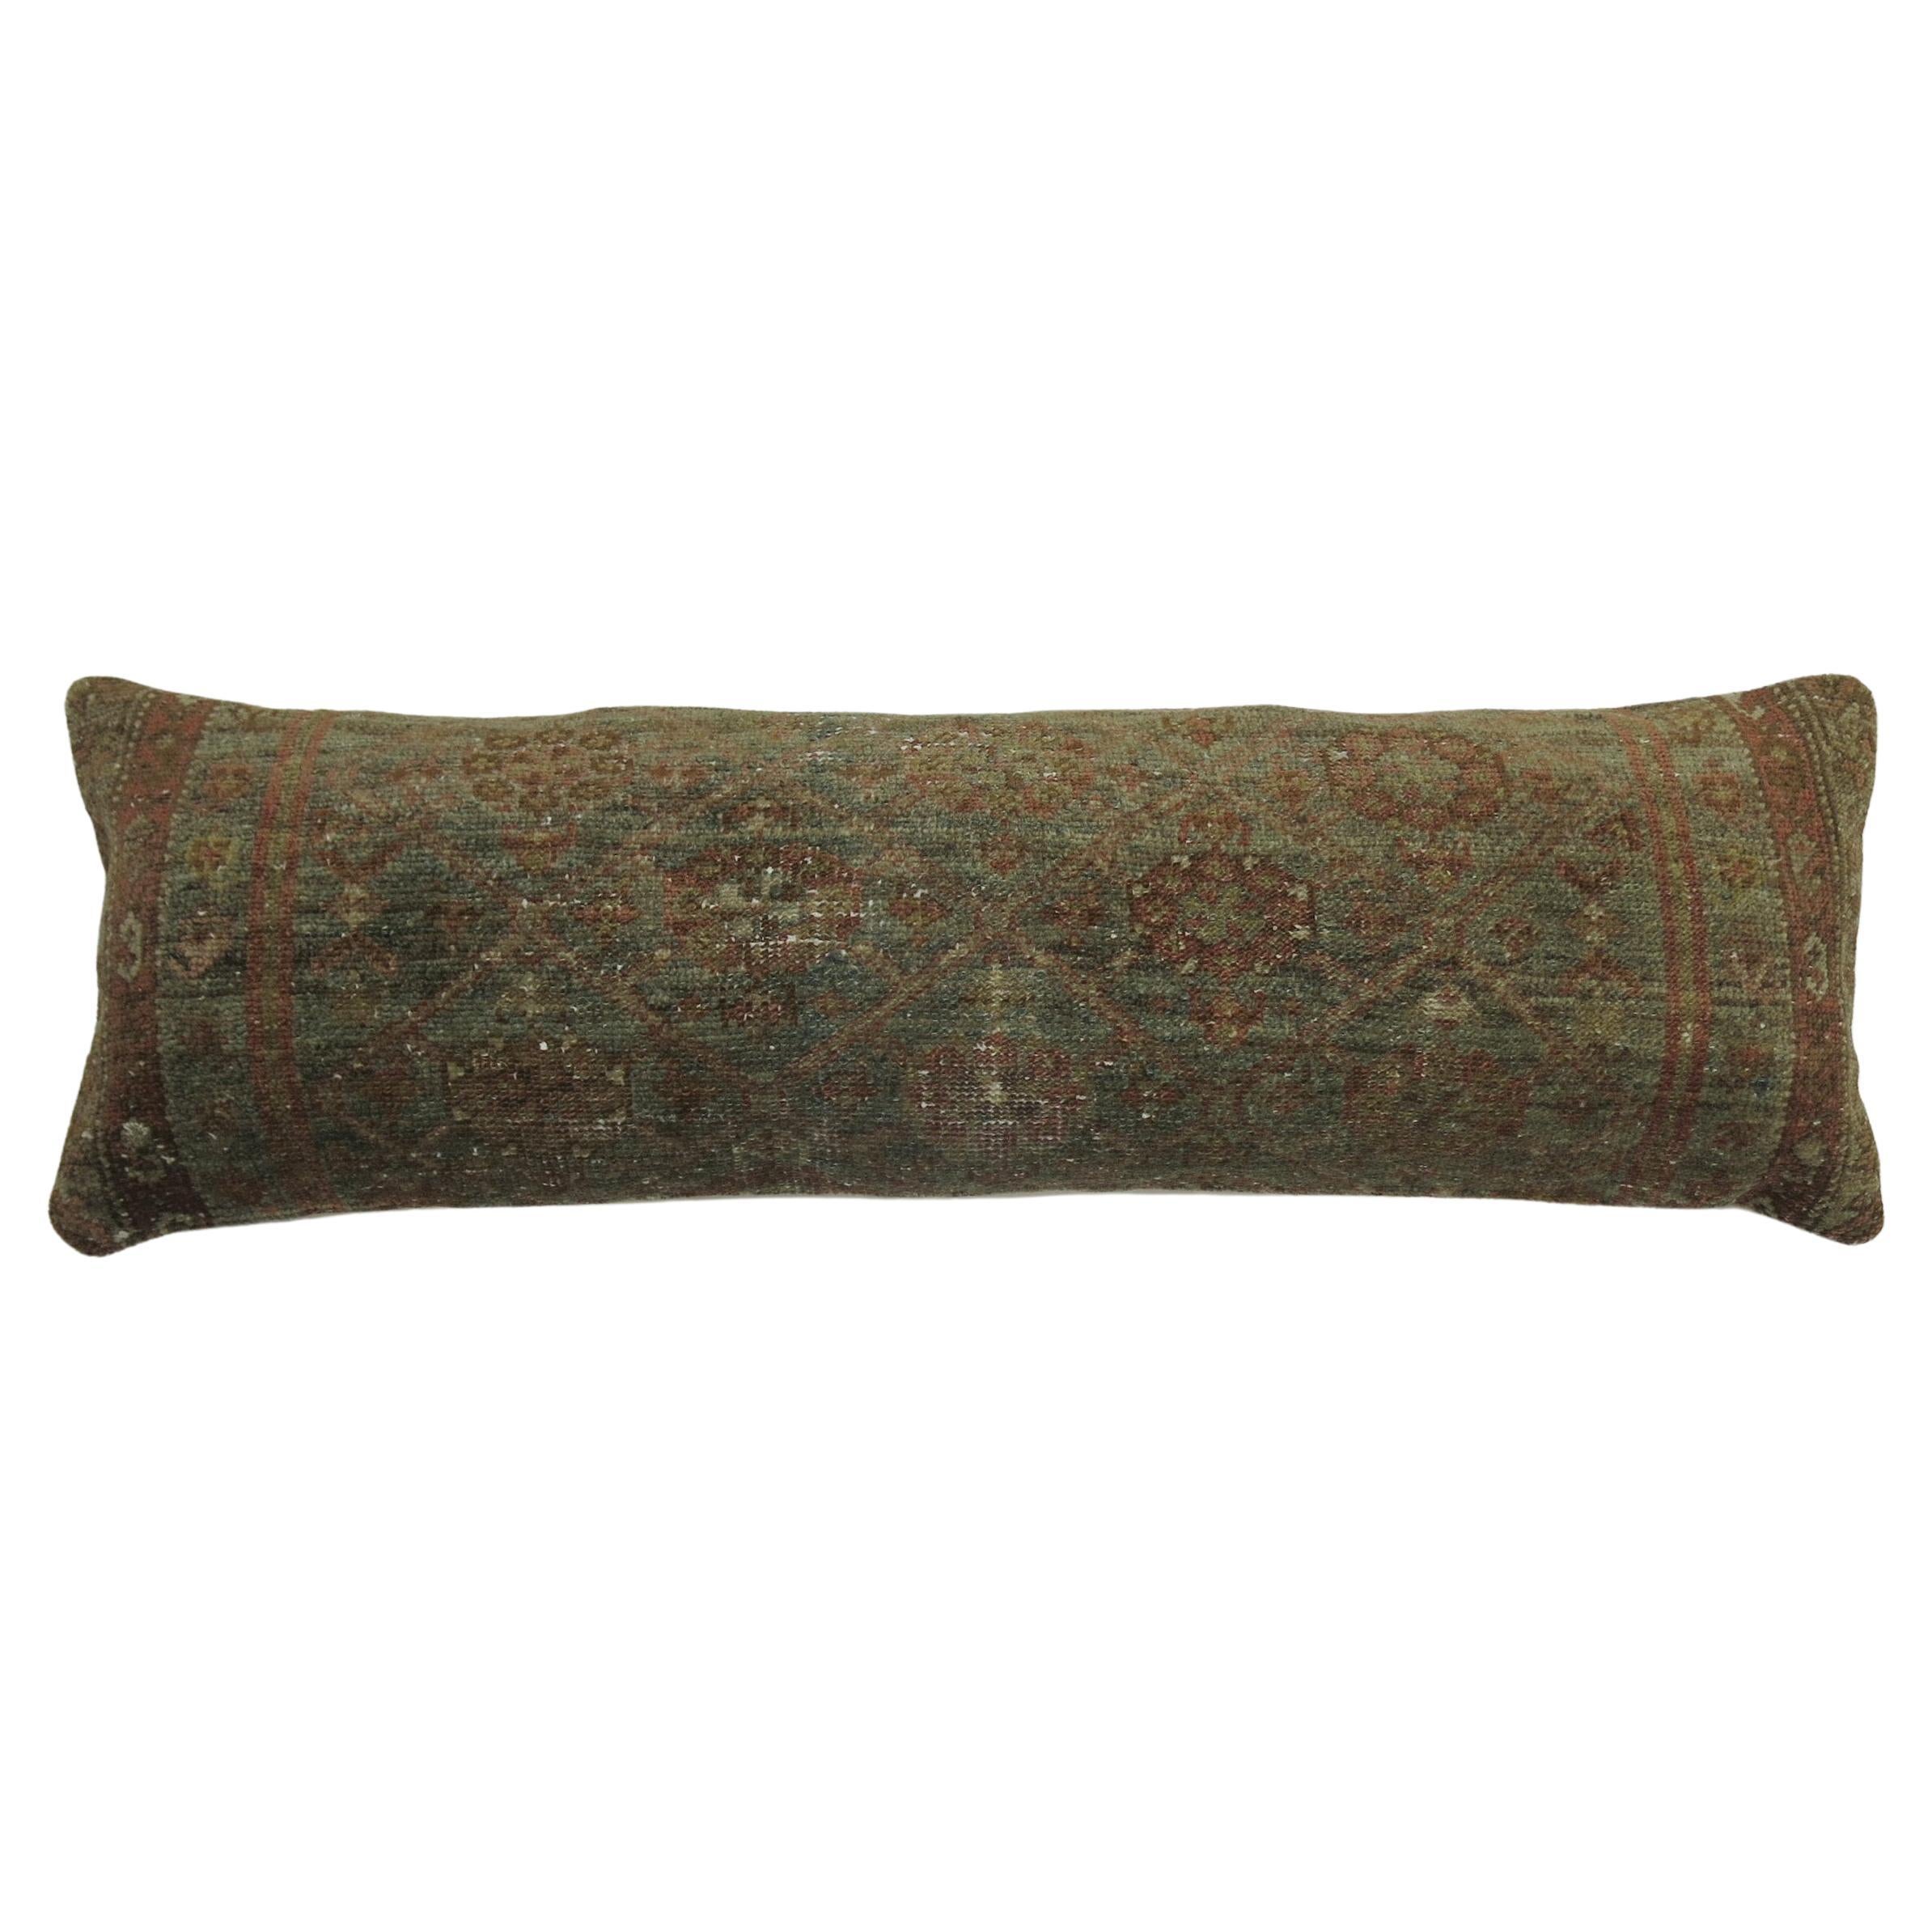  Narrow Antique Persian Bolster Rug Pillow